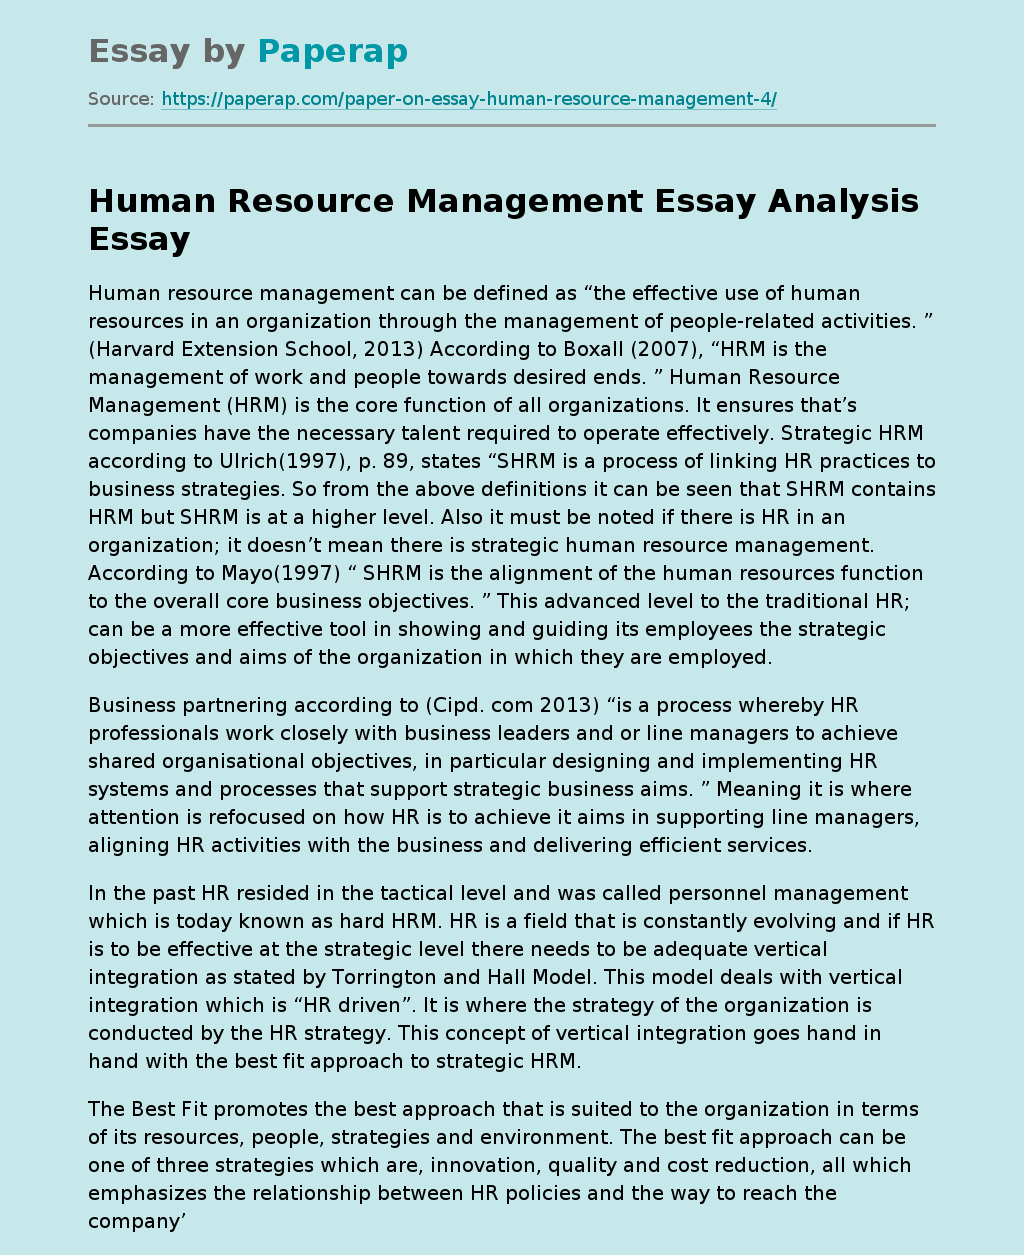 Human Resource Management Essay Analysis